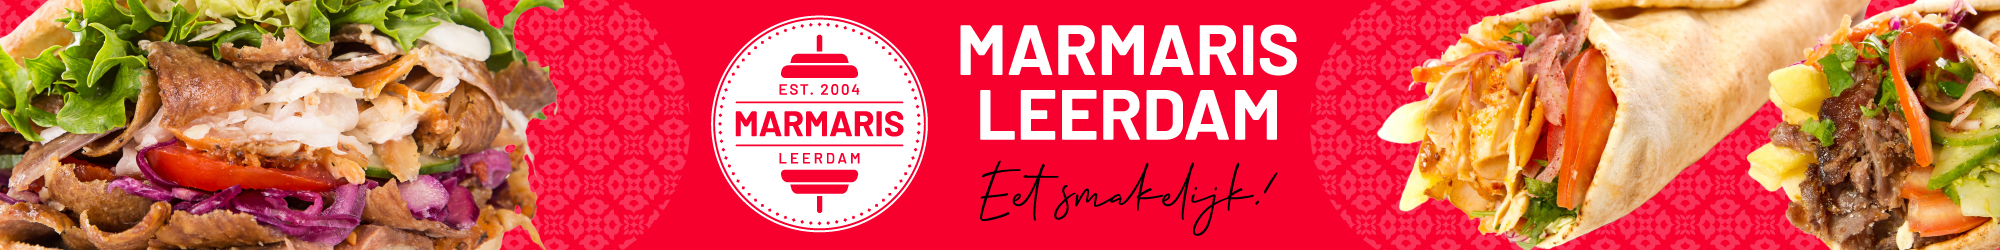 Marmaris Leerdam